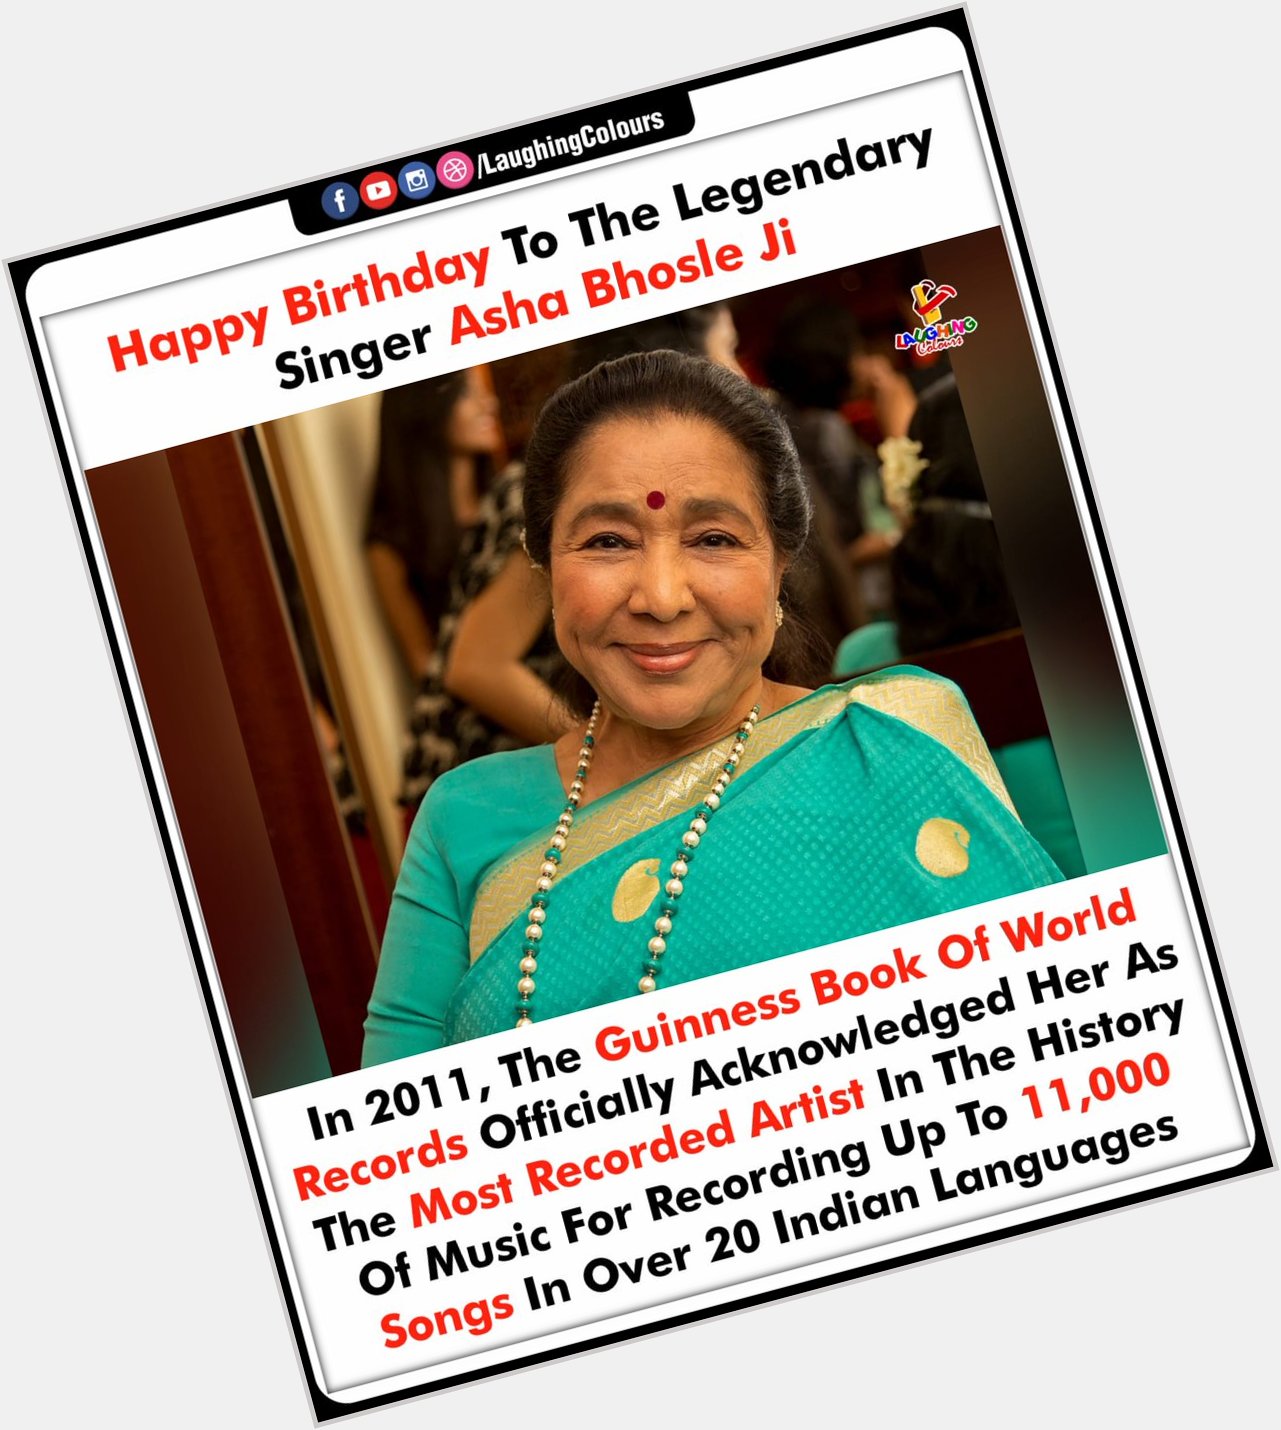 Happy Birthday To The Legendary Singer Asha Bhosle Ji -     